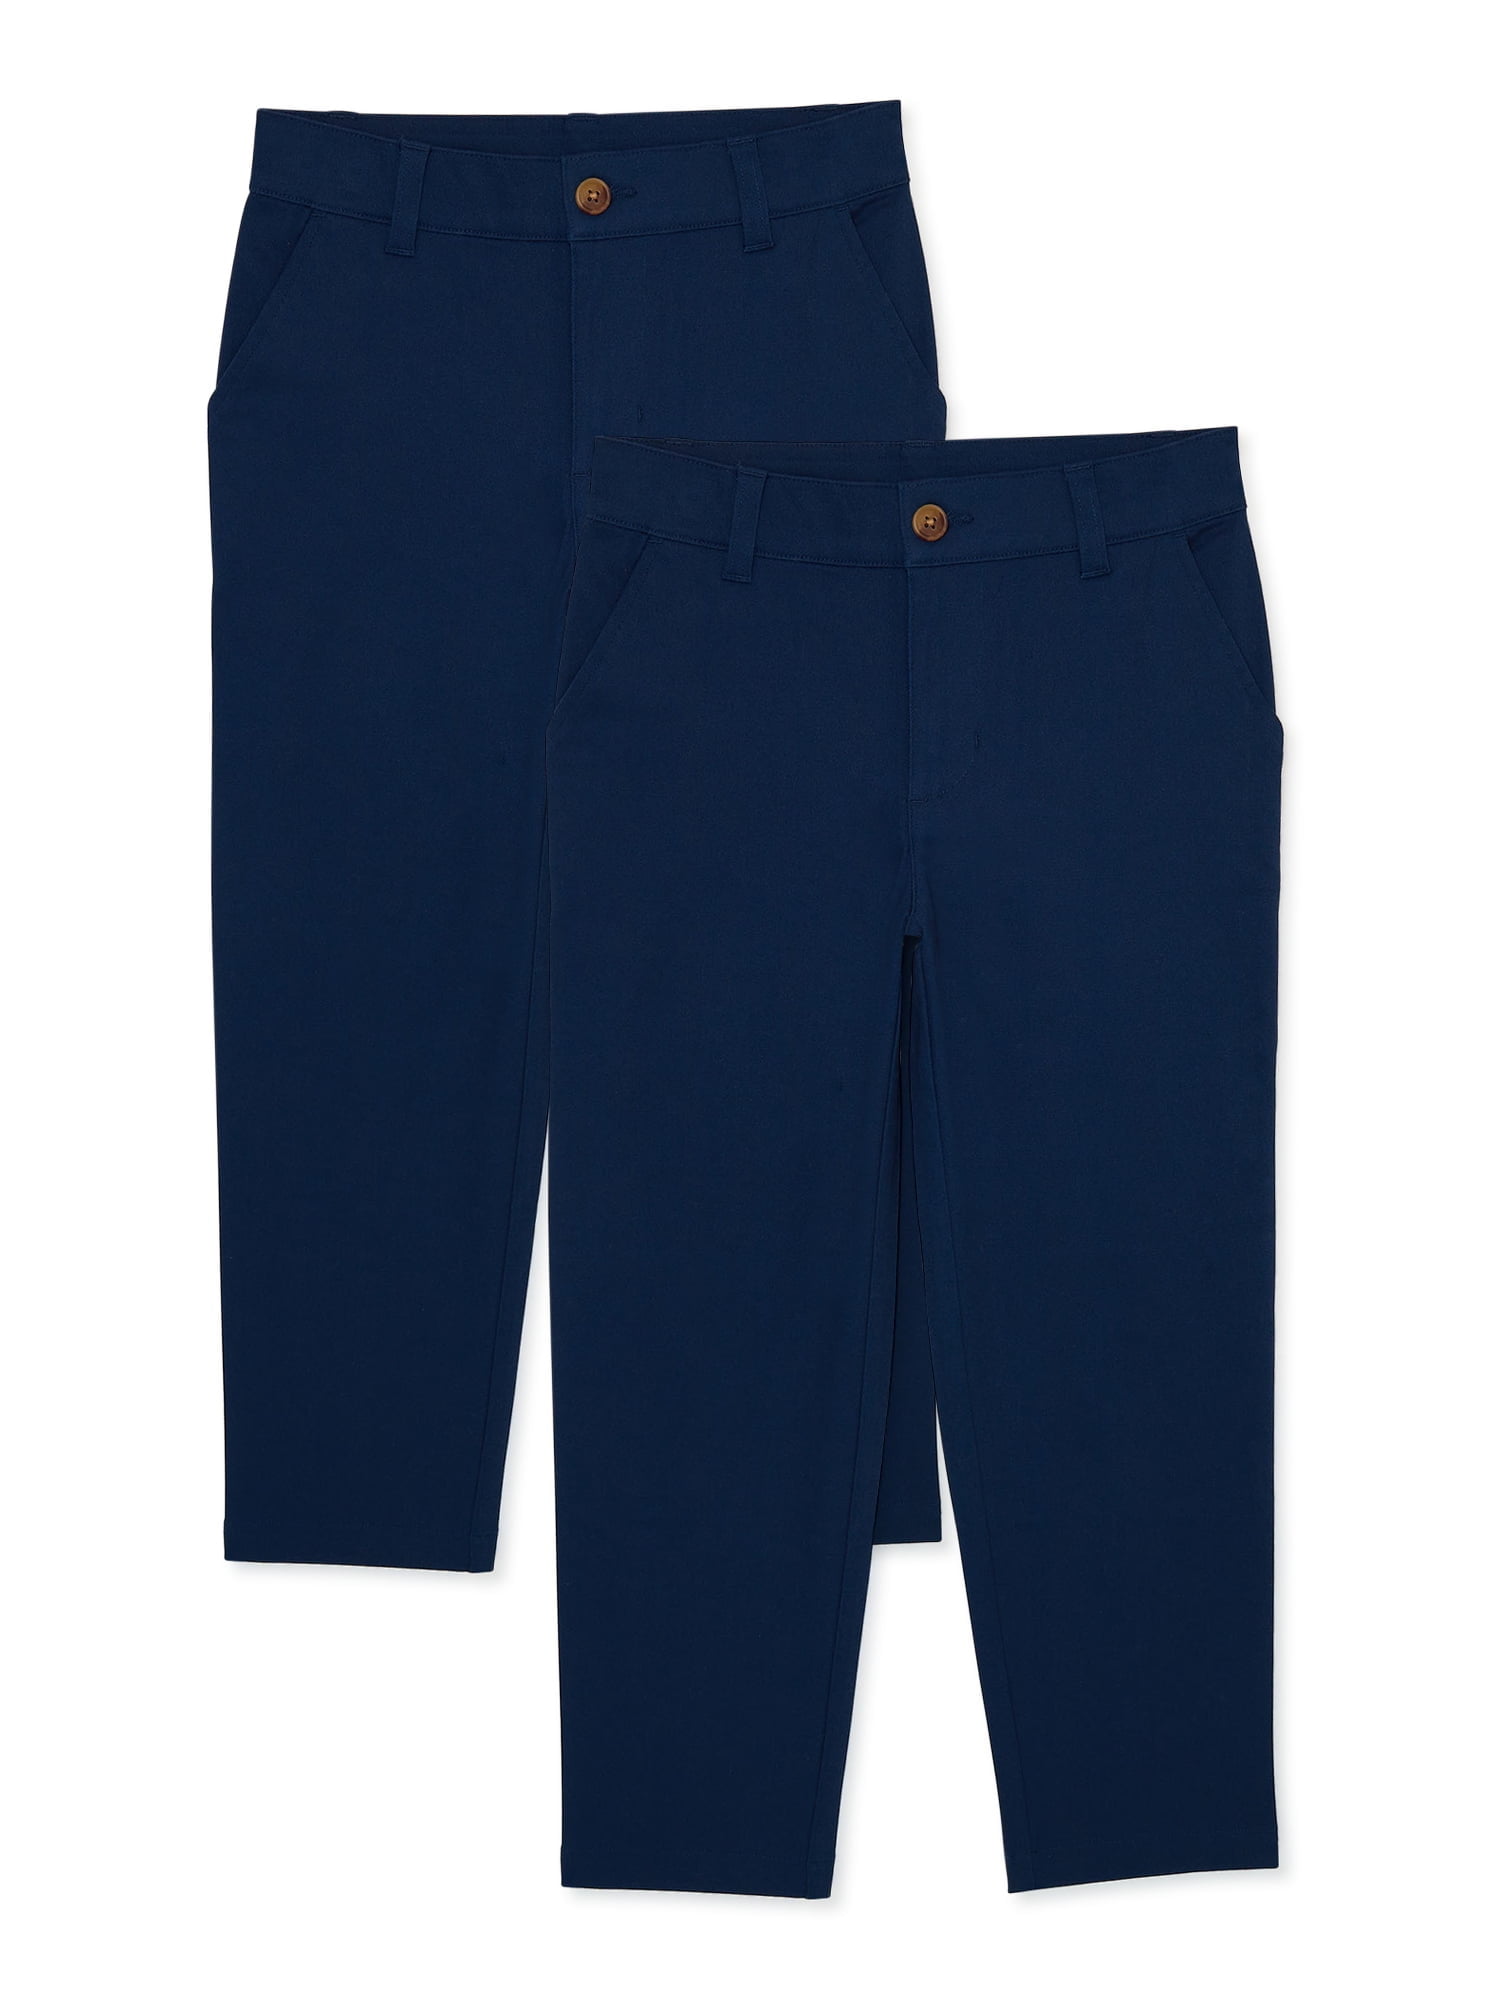 Boys Classic Flat Front School Uniform Pants - Sizes 4-20 – GalaxybyHarvic